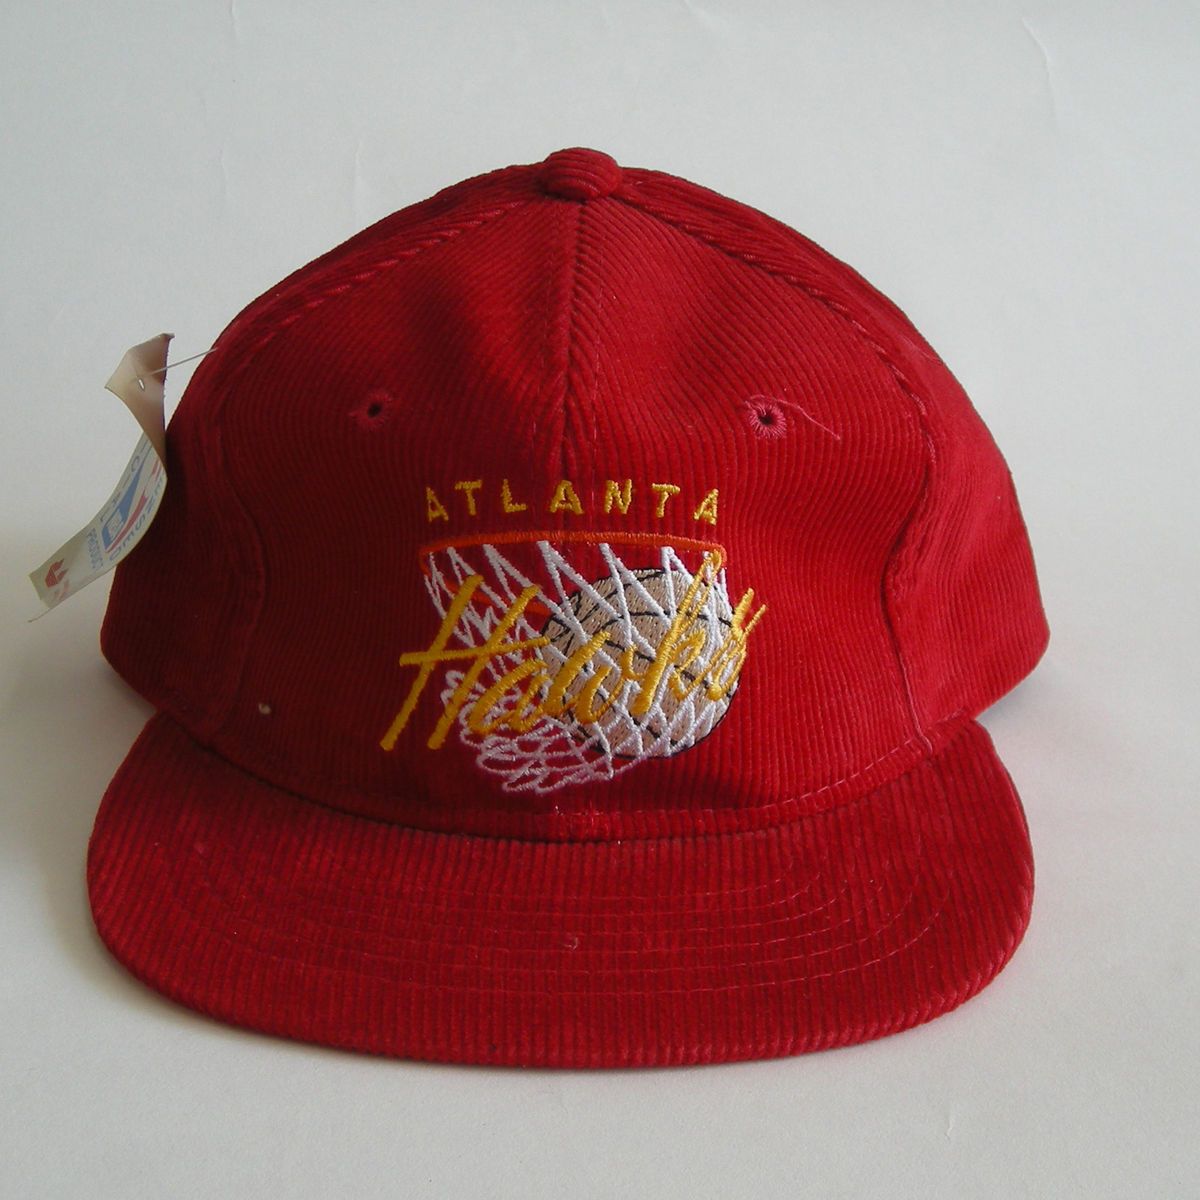 New ATLANTA HAWKS Rare Vintage Snapback Cap Hat Corduroy 80s 90s by 